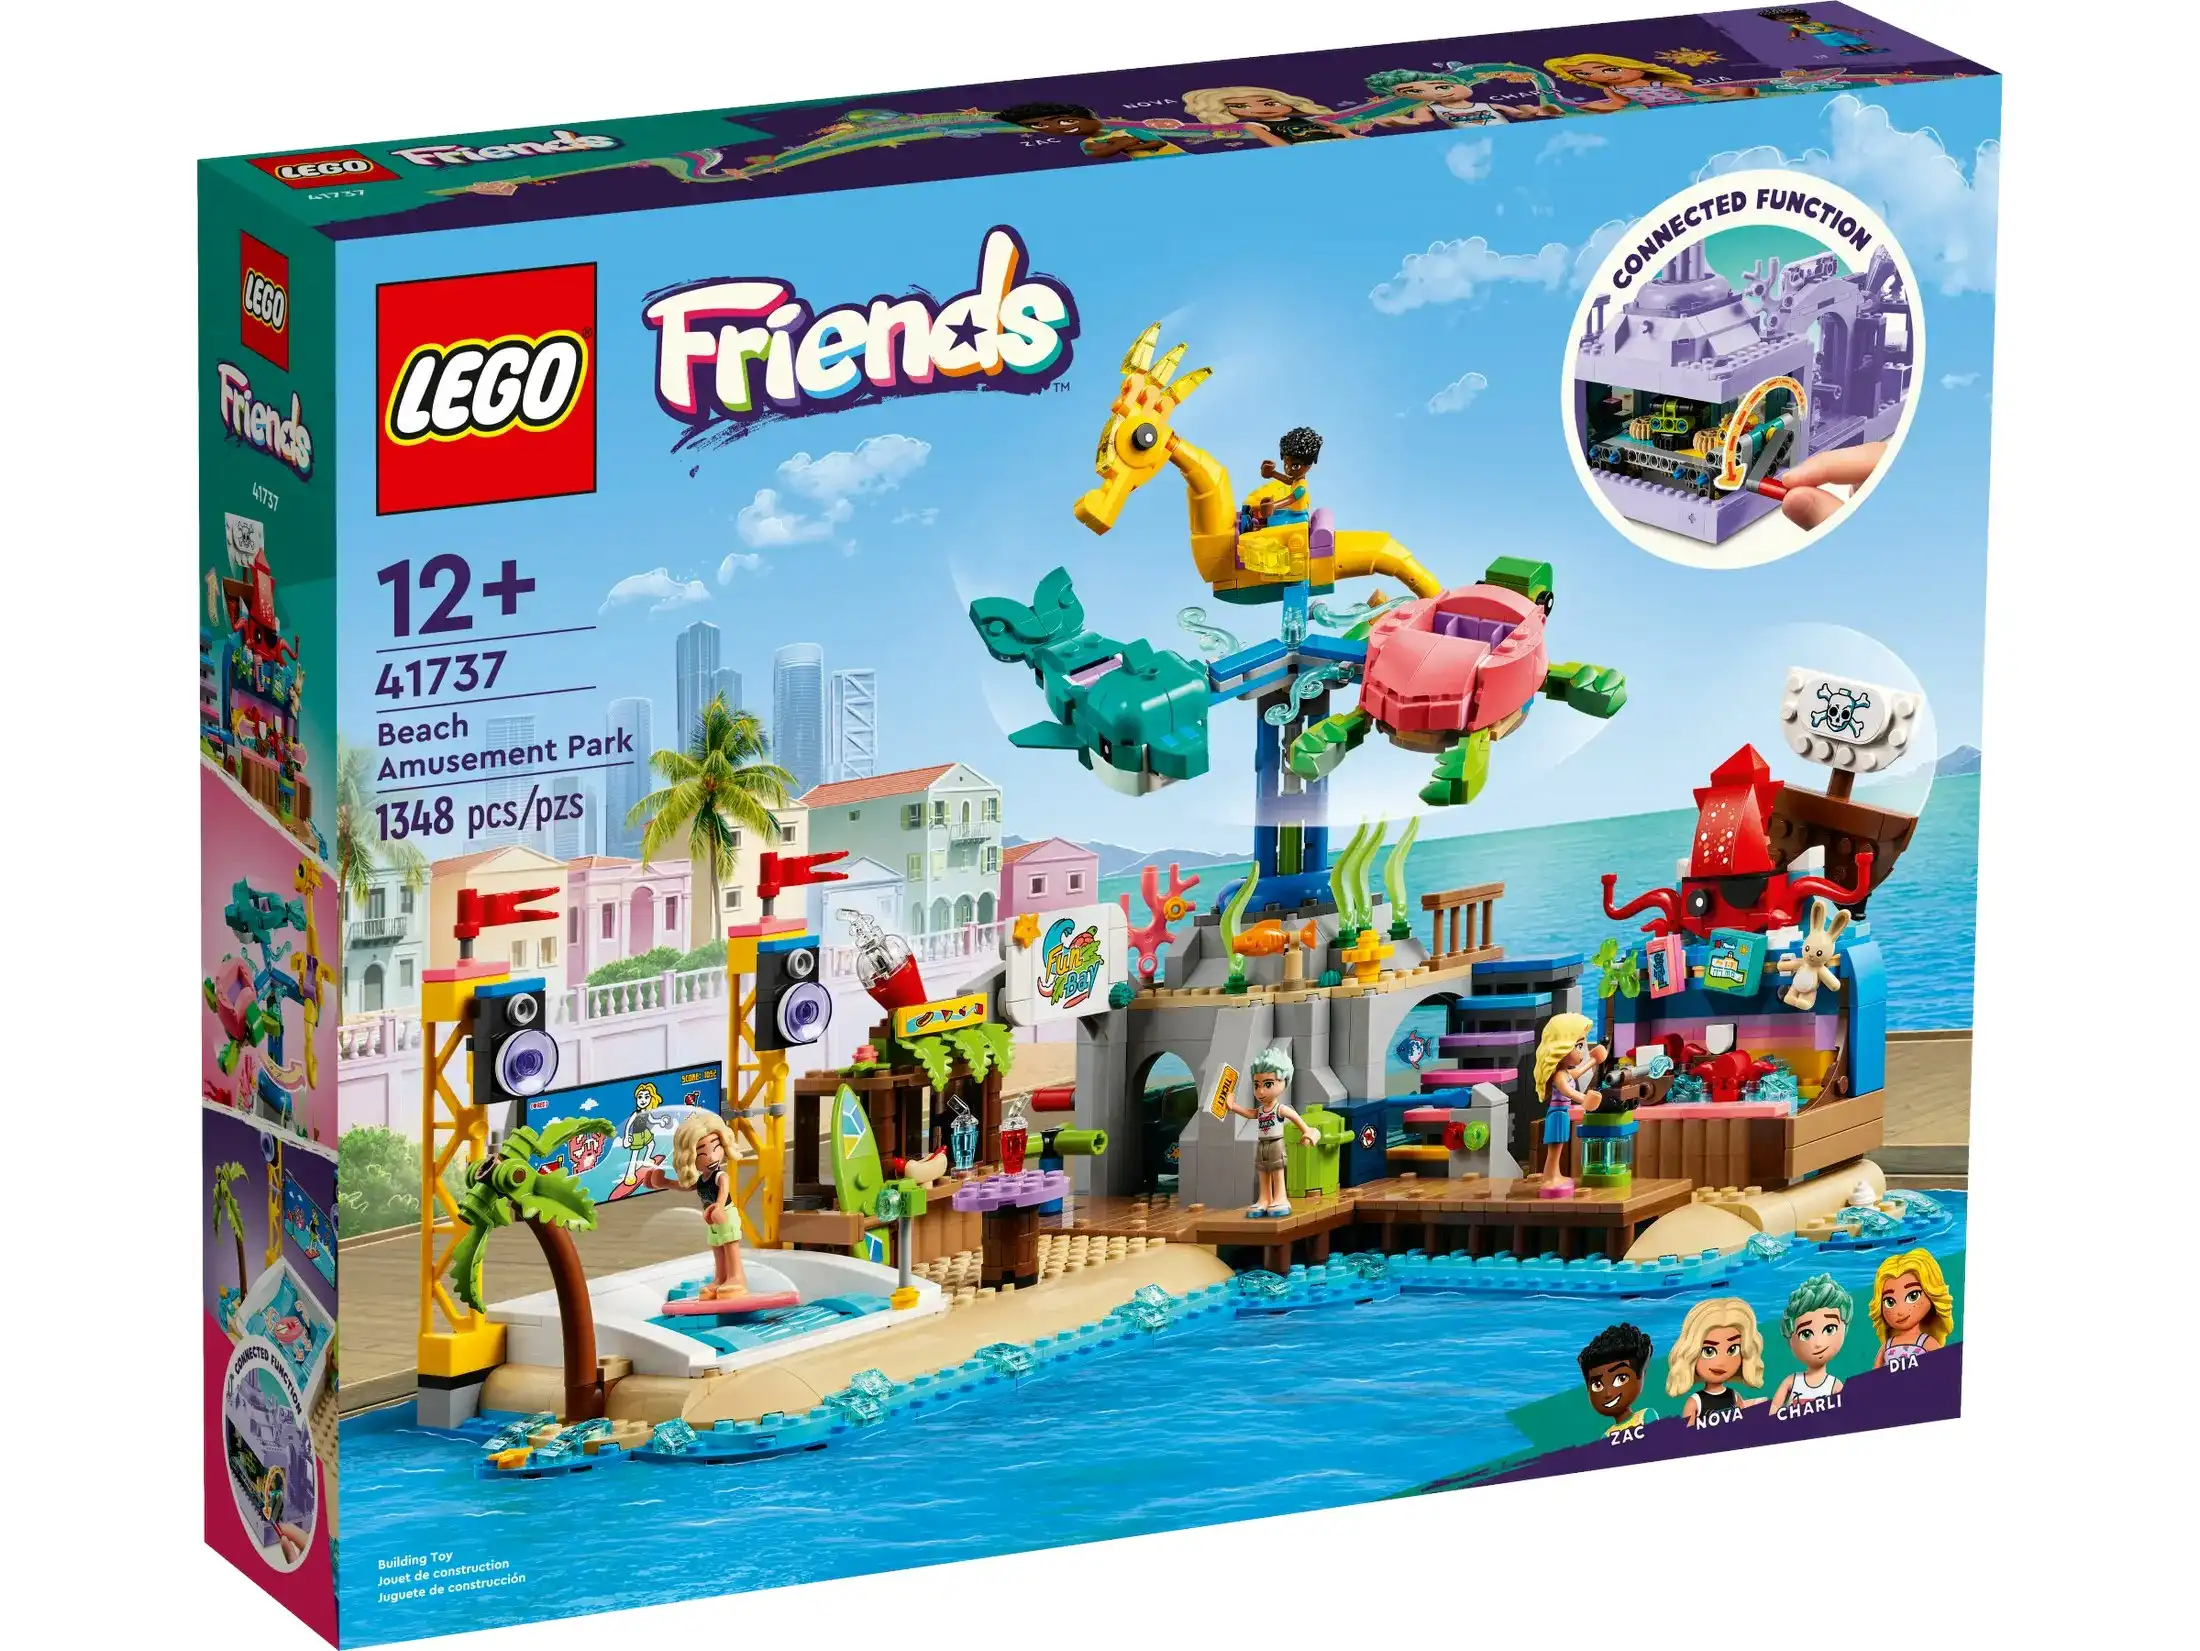 LEGO 41737 Beach Amusement Park - Friends